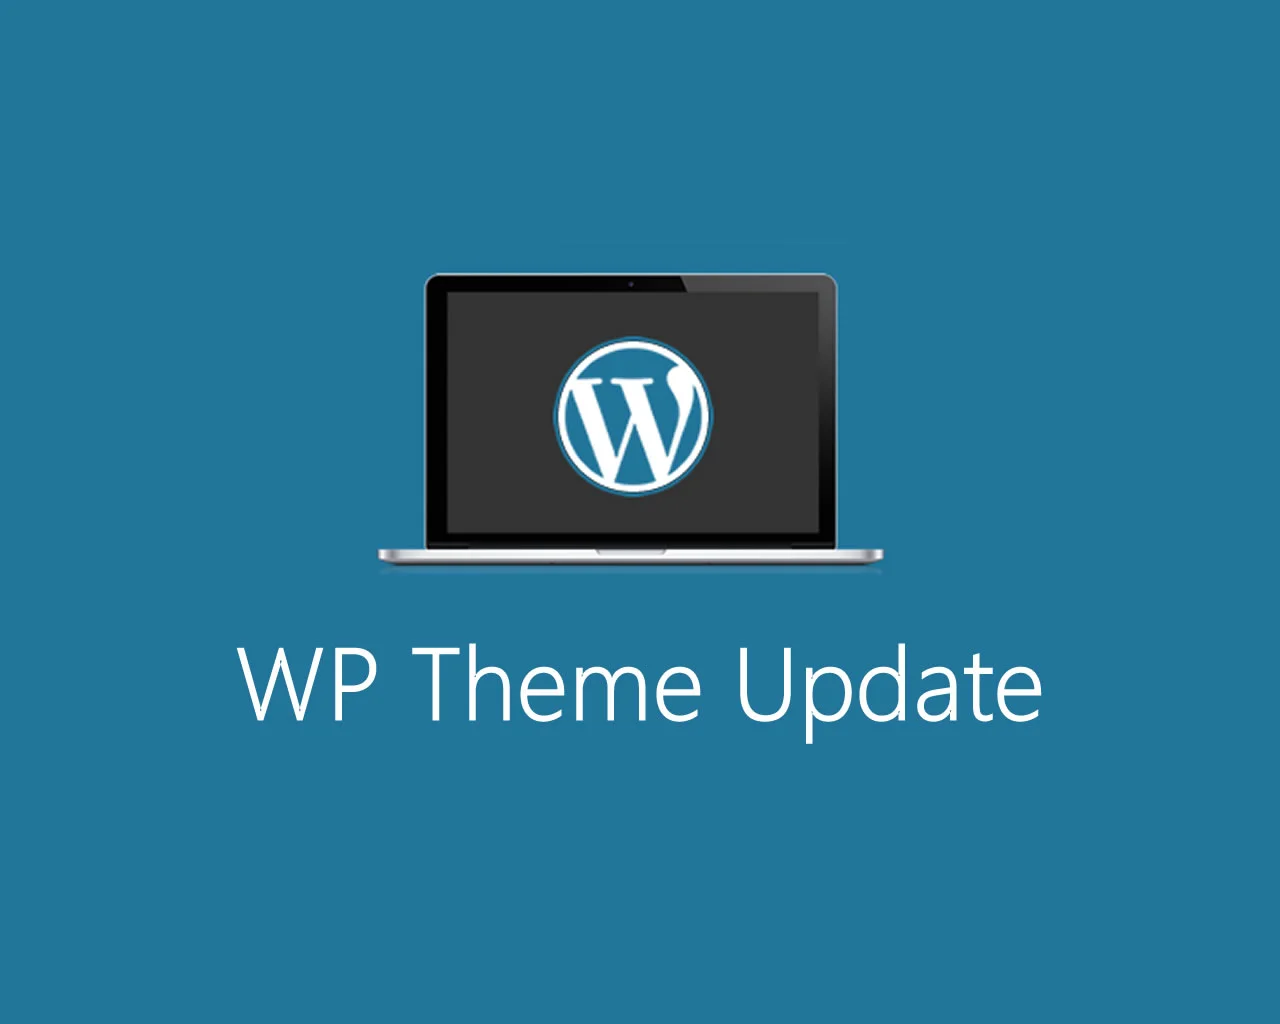 Theme update for WordPress Service